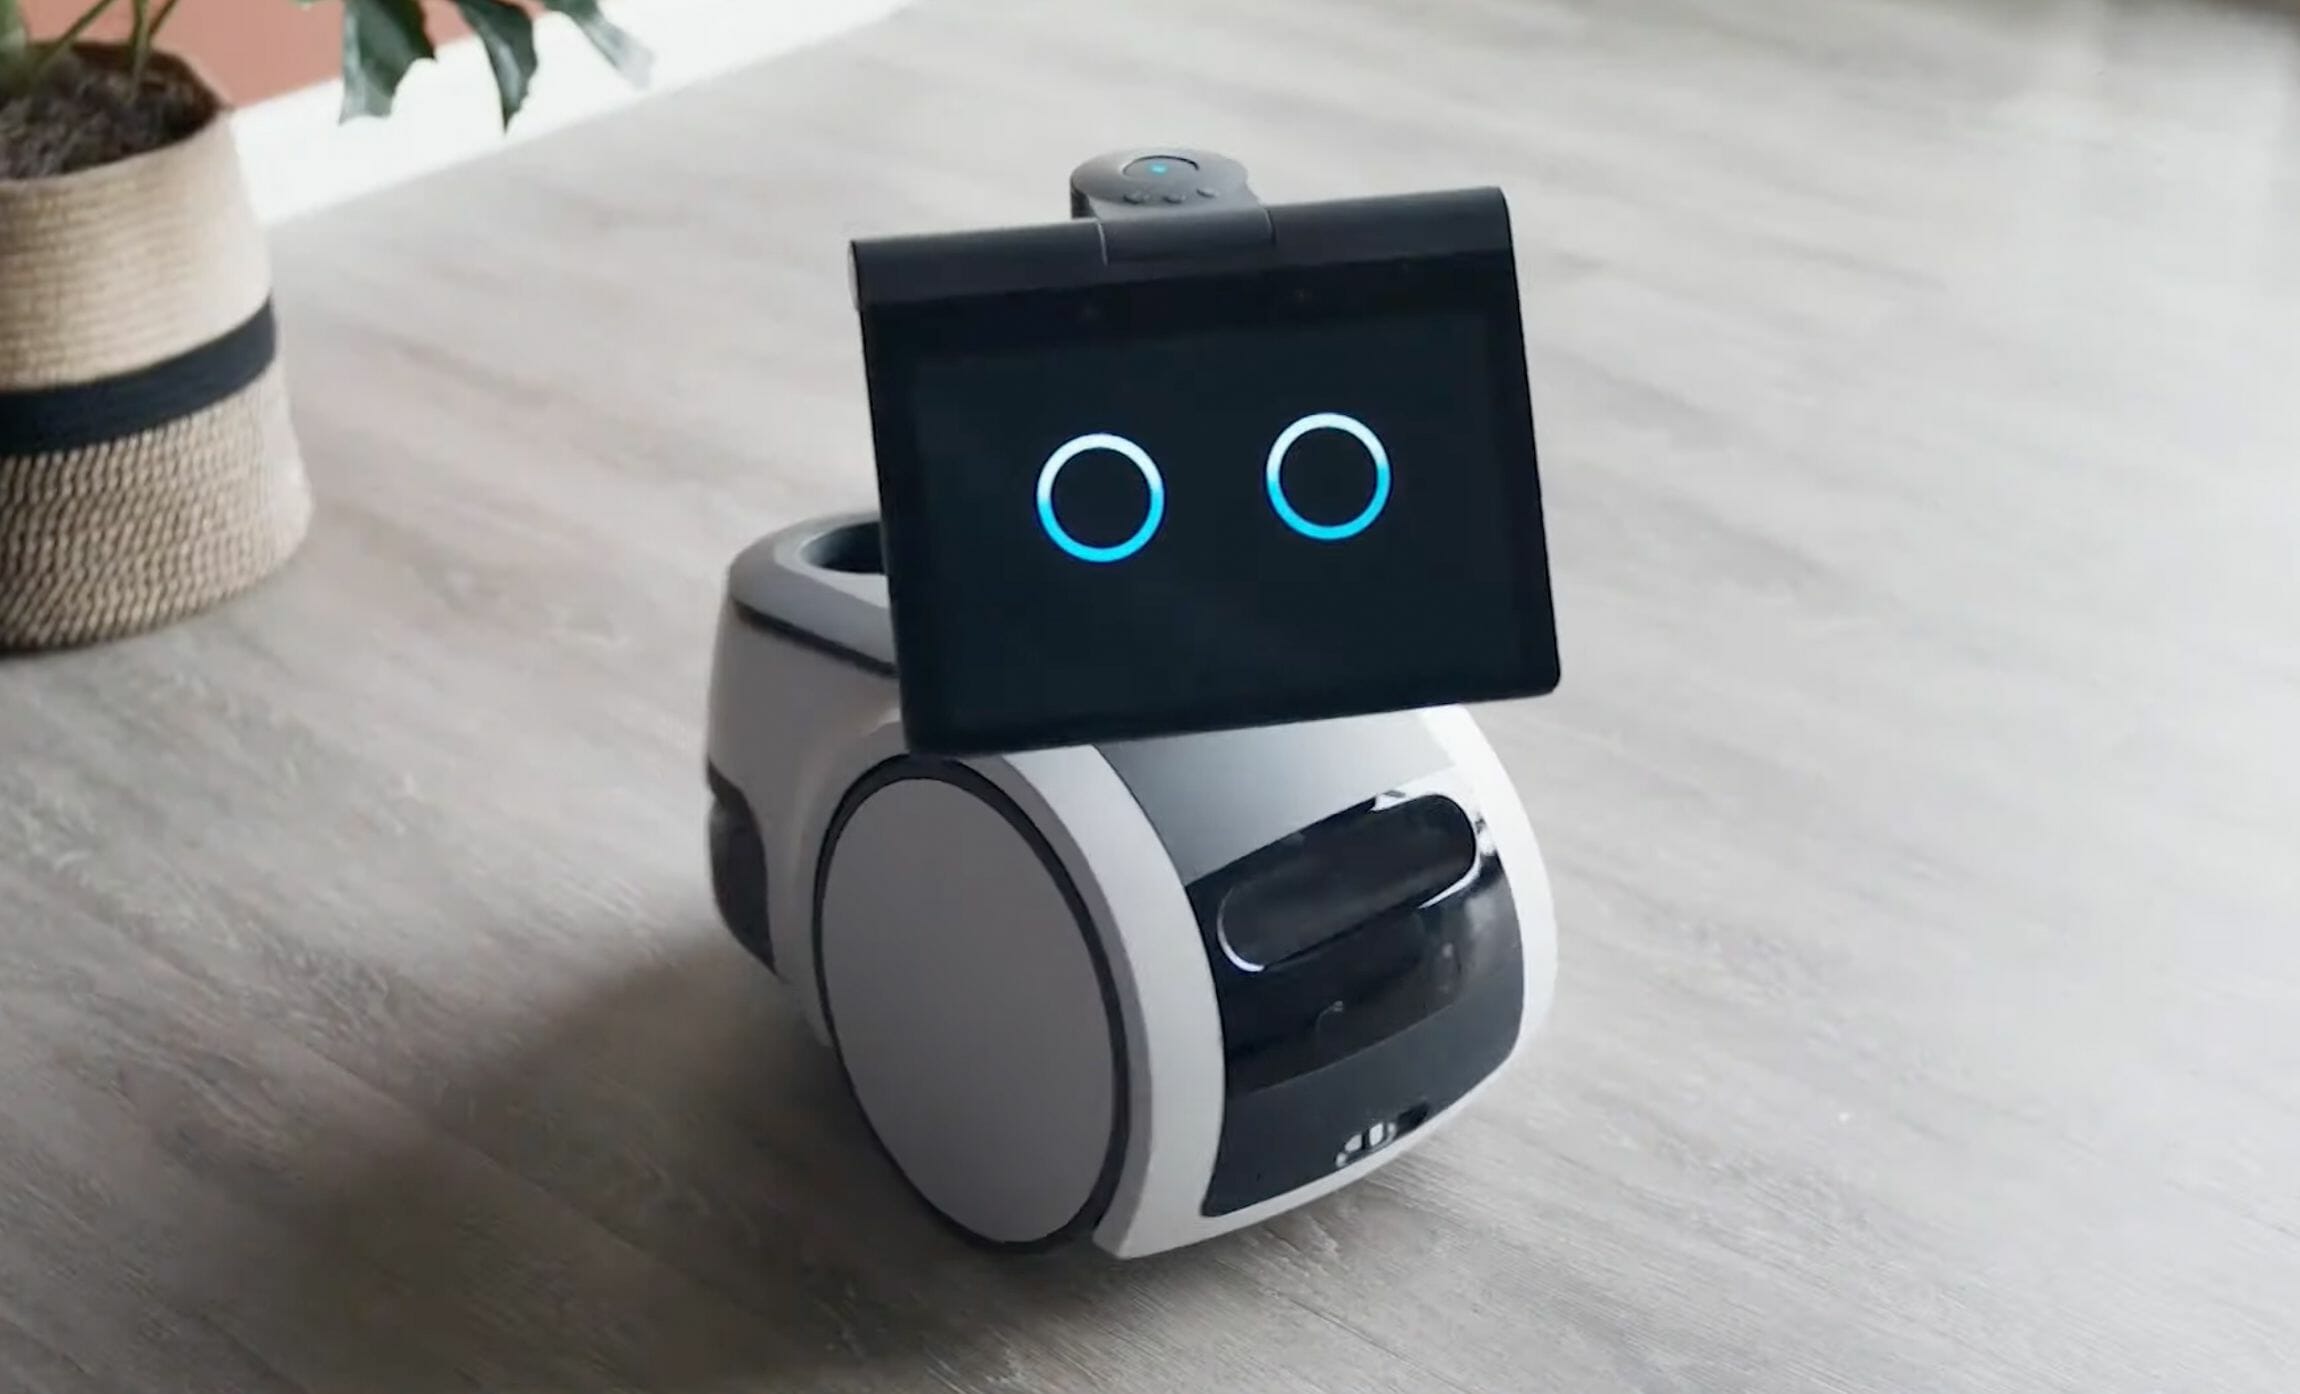 bakke Mærkelig Transformer Meet Amazon's Astro, the Alexa-powered robot-dog and home assistant